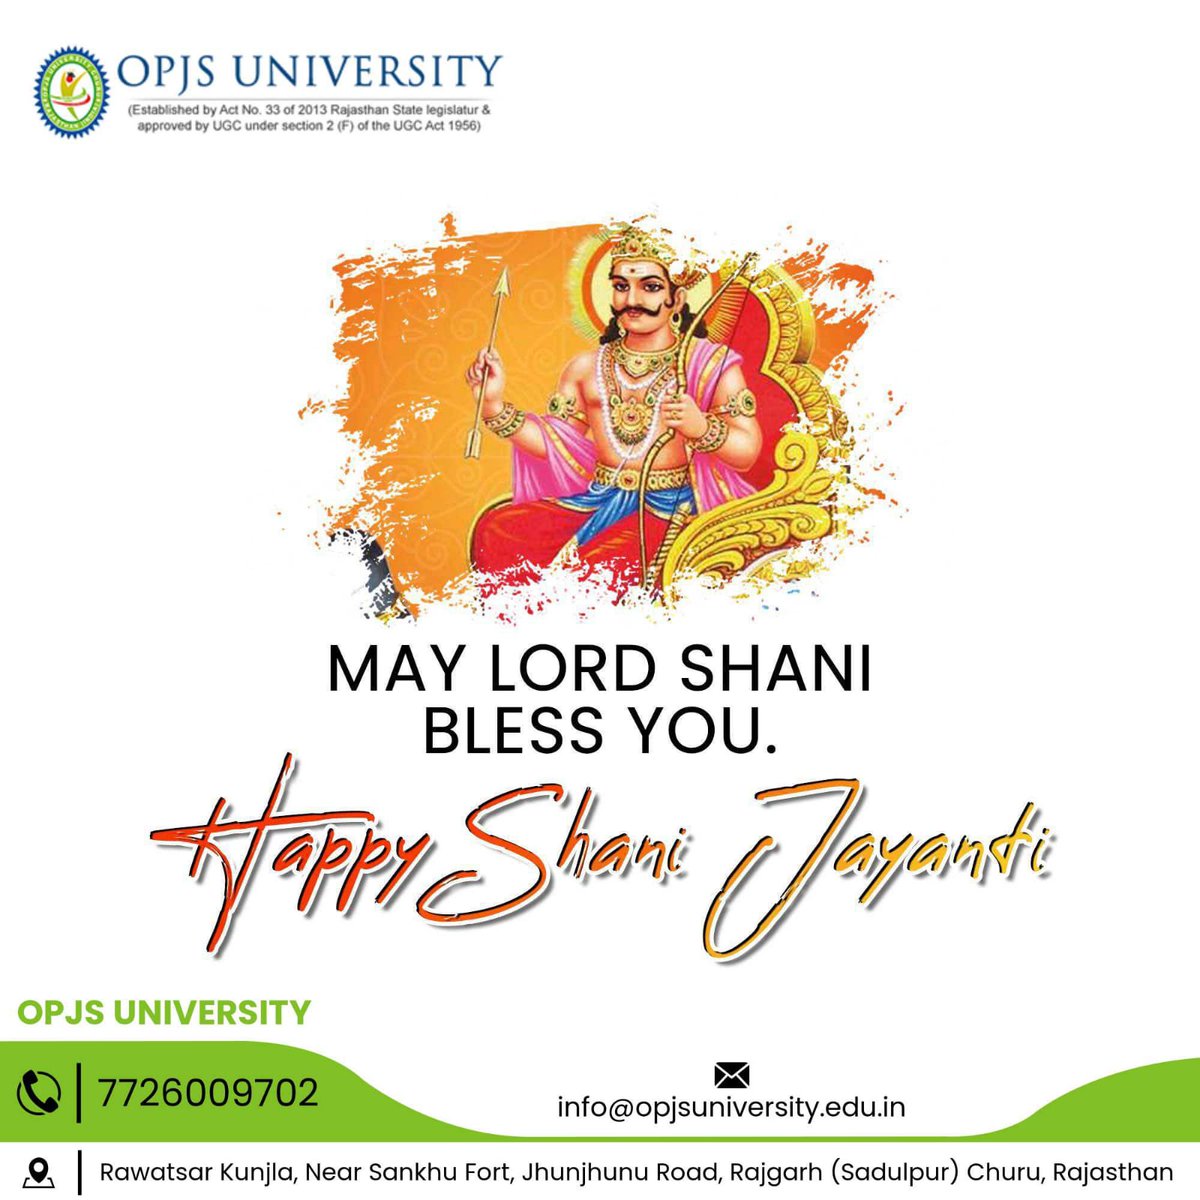 #ShaniDev #Karma #VedicAstrology #BlessingsOfShani #DivineBlessings #DivineGrace #CosmicEnergies #ShaniBhagwan #Saturn #PositiveKarma